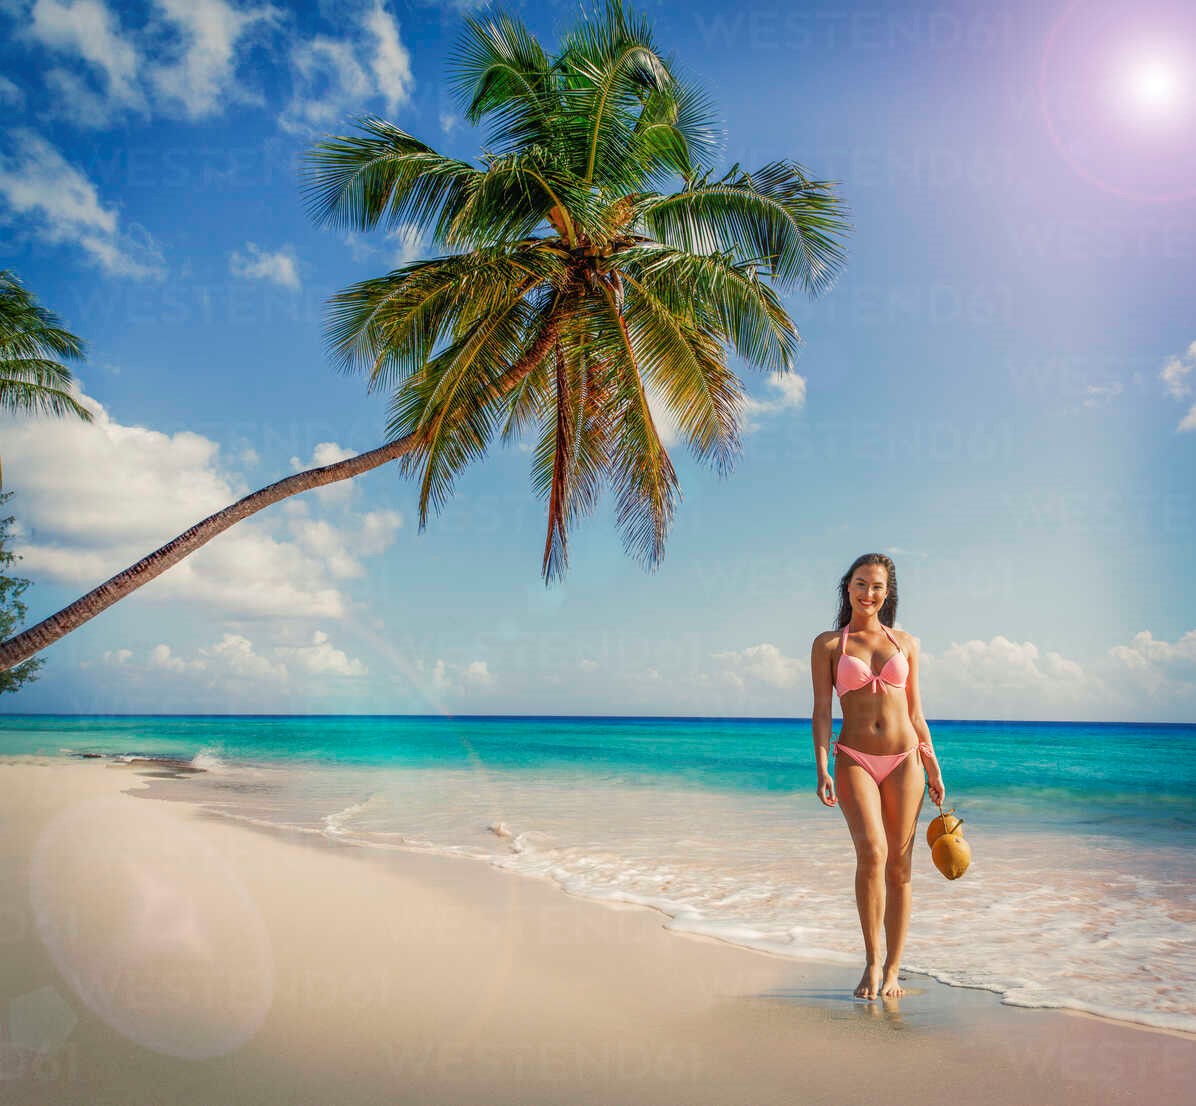 Portrait of young woman wearing bikini standing on Miami beach, Florida.